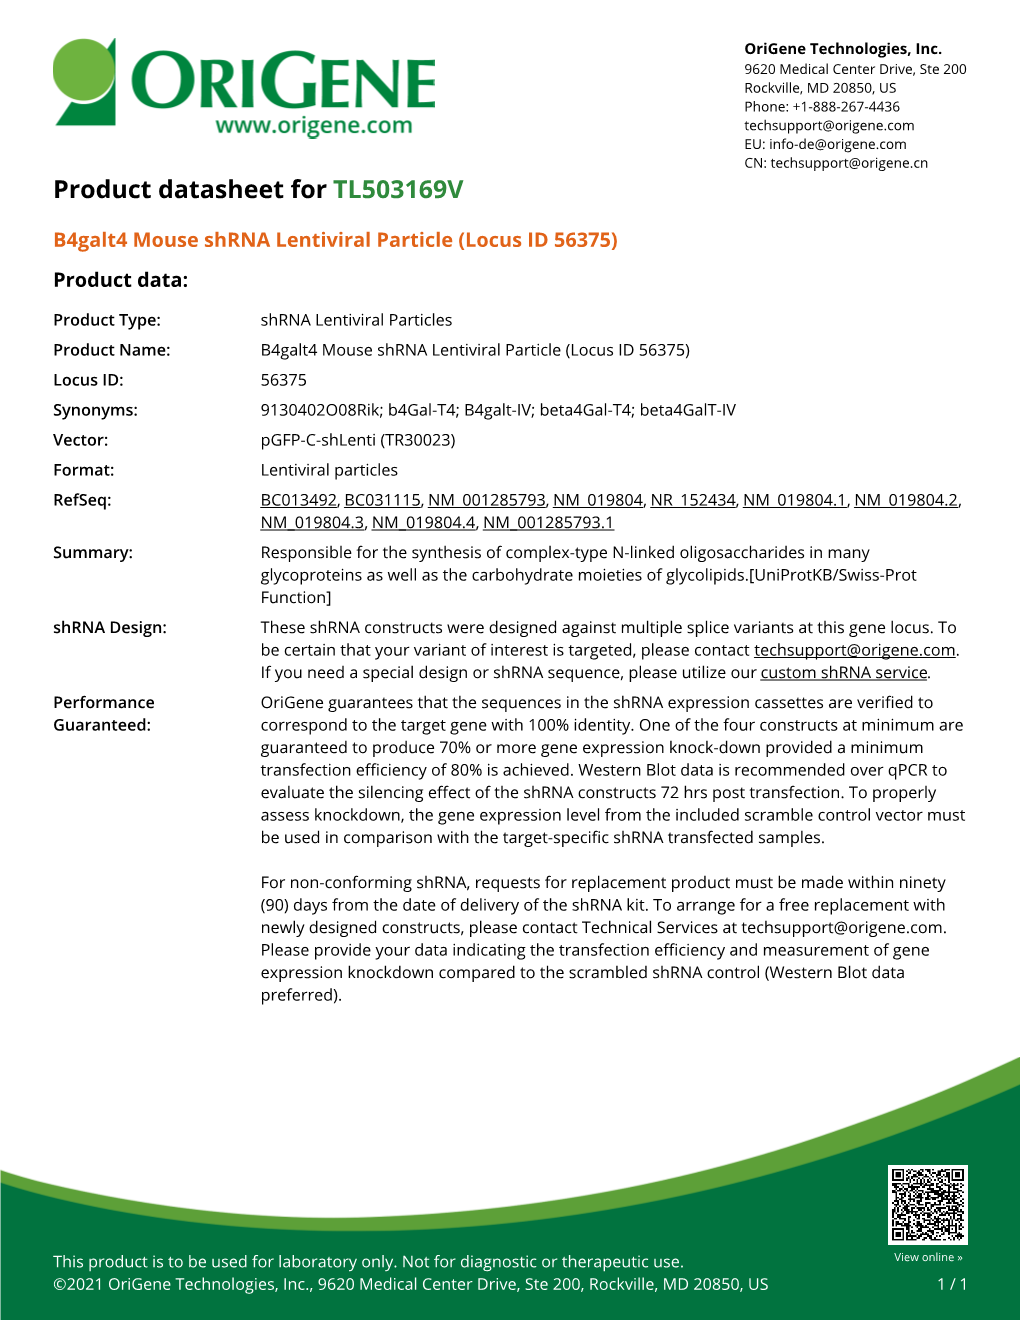 B4galt4 Mouse Shrna Lentiviral Particle (Locus ID 56375) Product Data